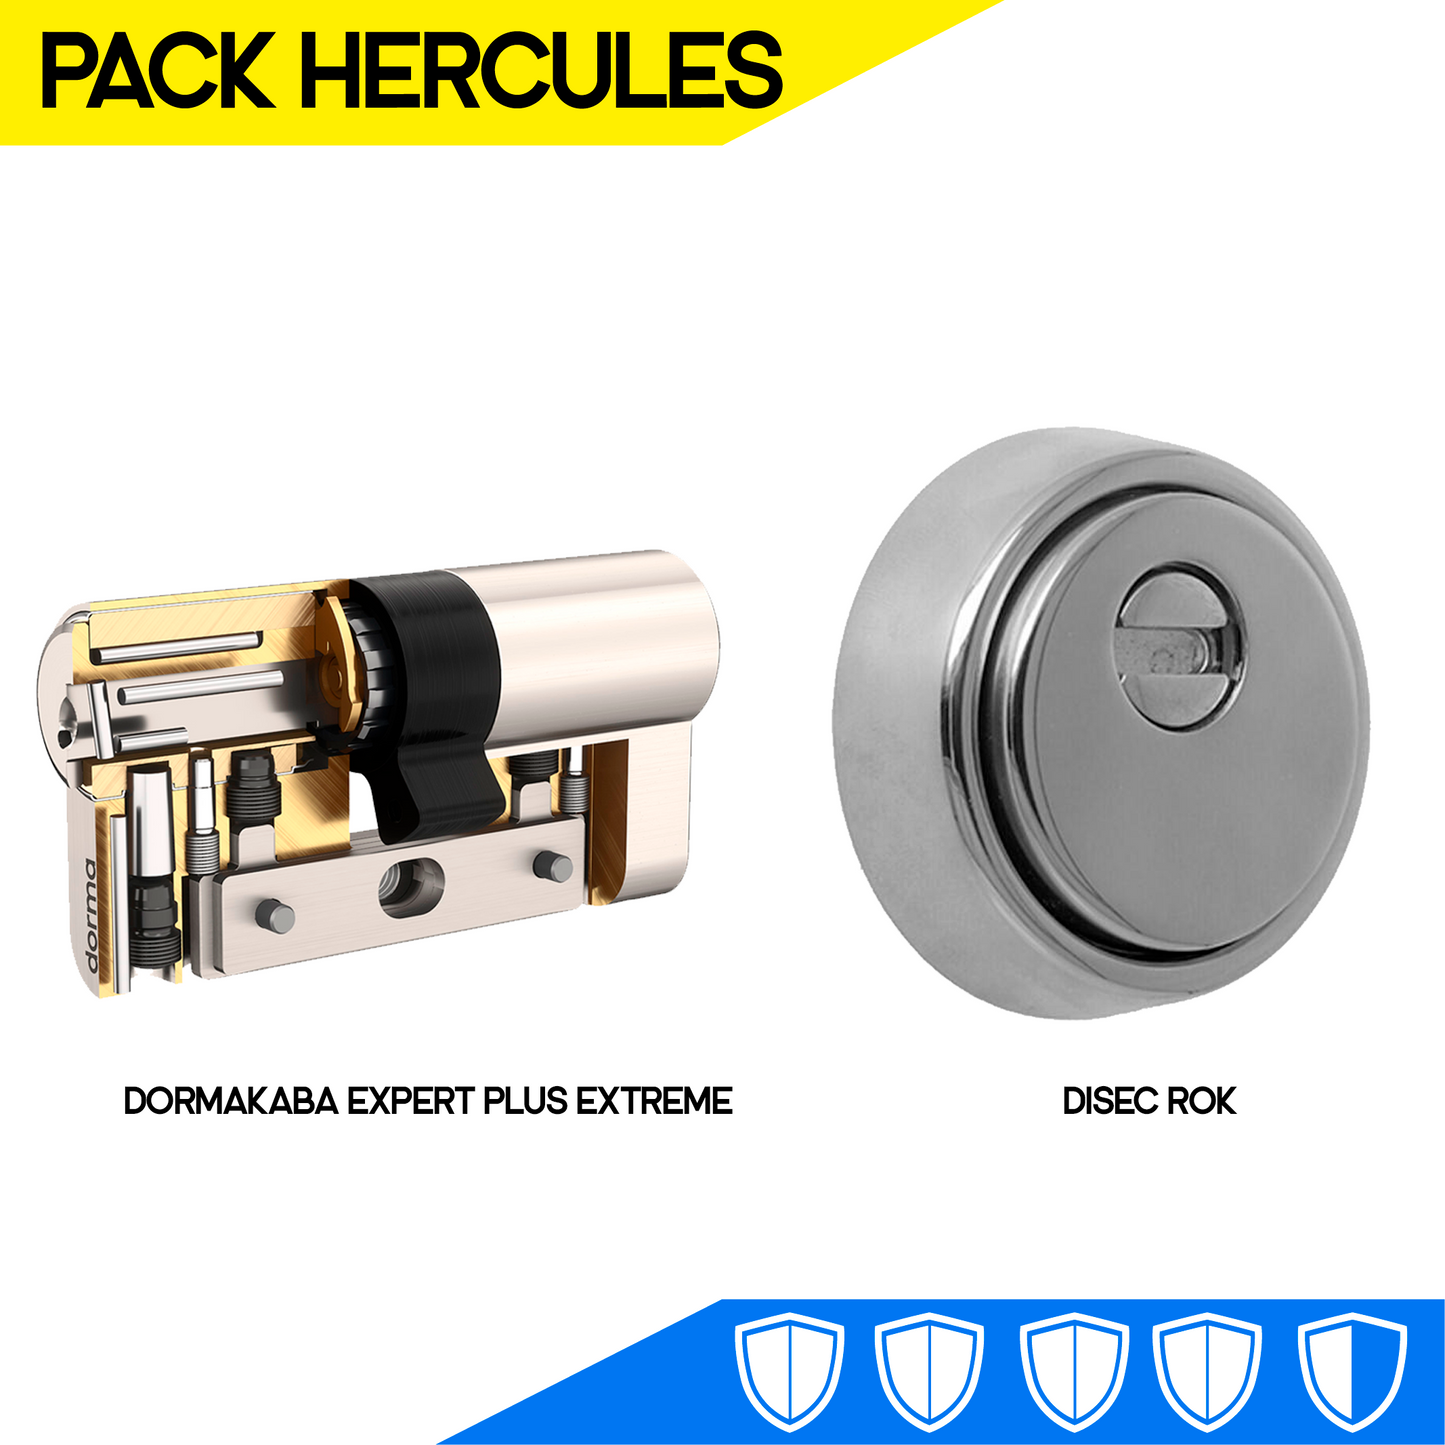 Pack de seguridad Hercules (Kaba Expert Plus Extreme + Disec ROK)